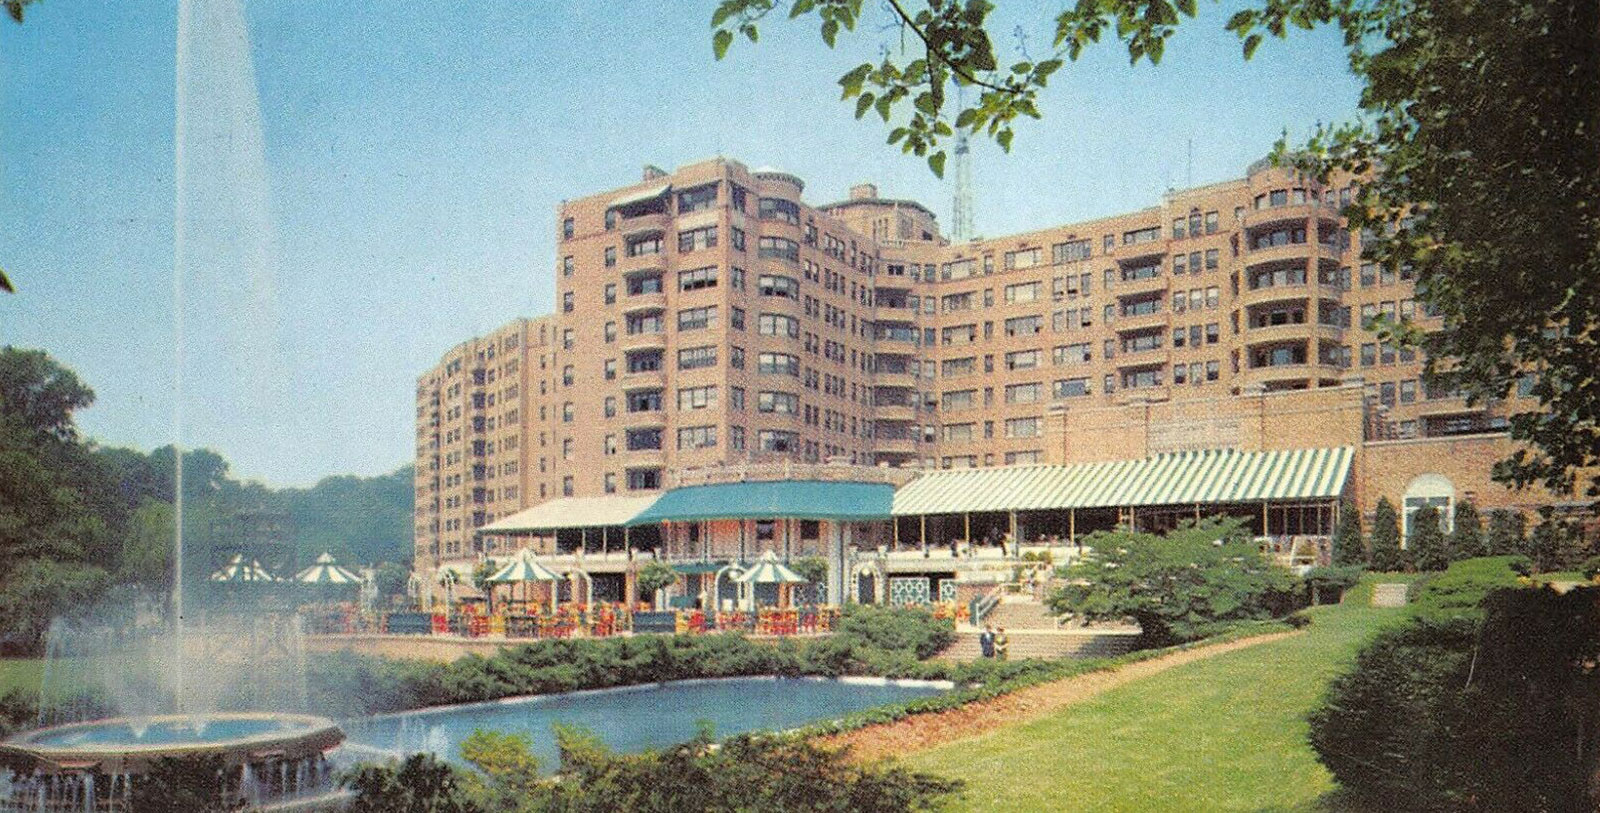 Historical Image of Vintage Postcard of Hotel Exterior and Rock Creek Park, Omni Shoreham Hotel, 1930, Member of Historic Hotels of America, in Washington, D.C.